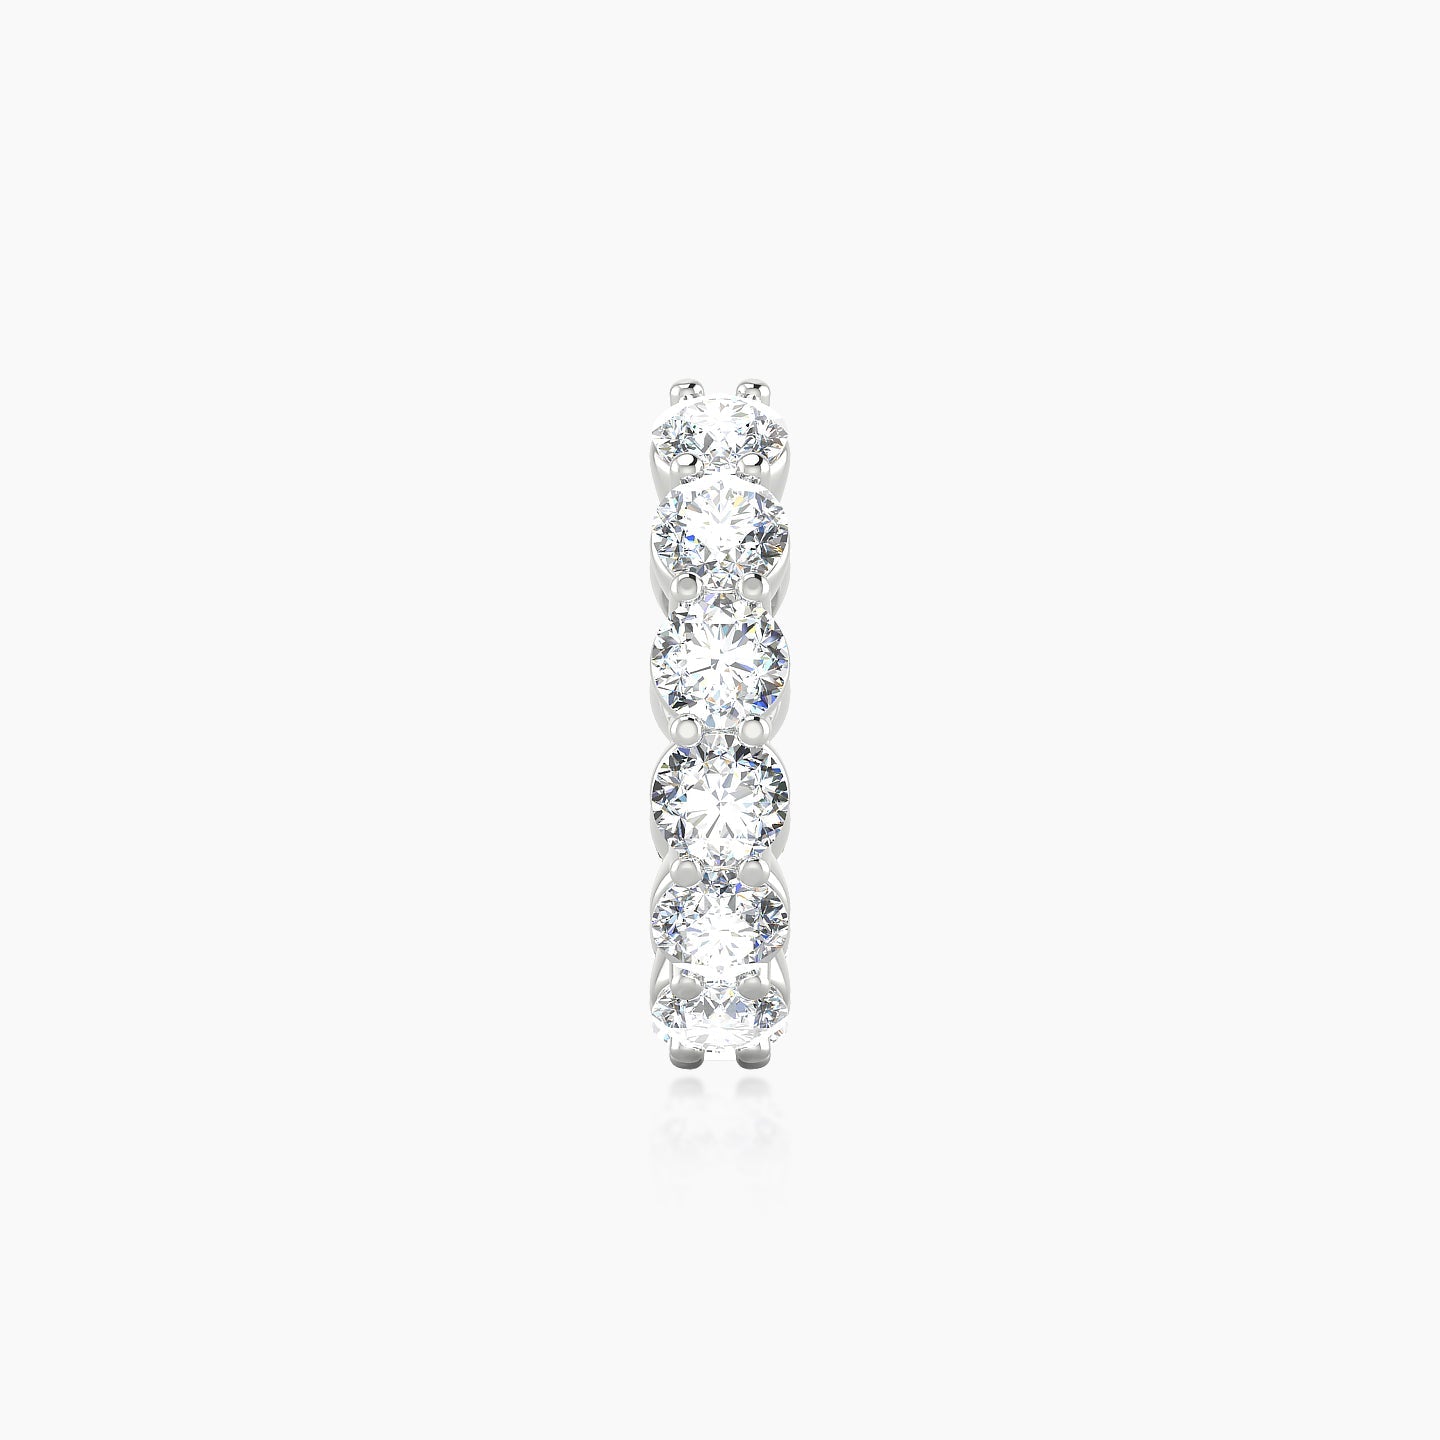 Diana | 18k White Gold 9.5 mm Diamond Hoop Piercing